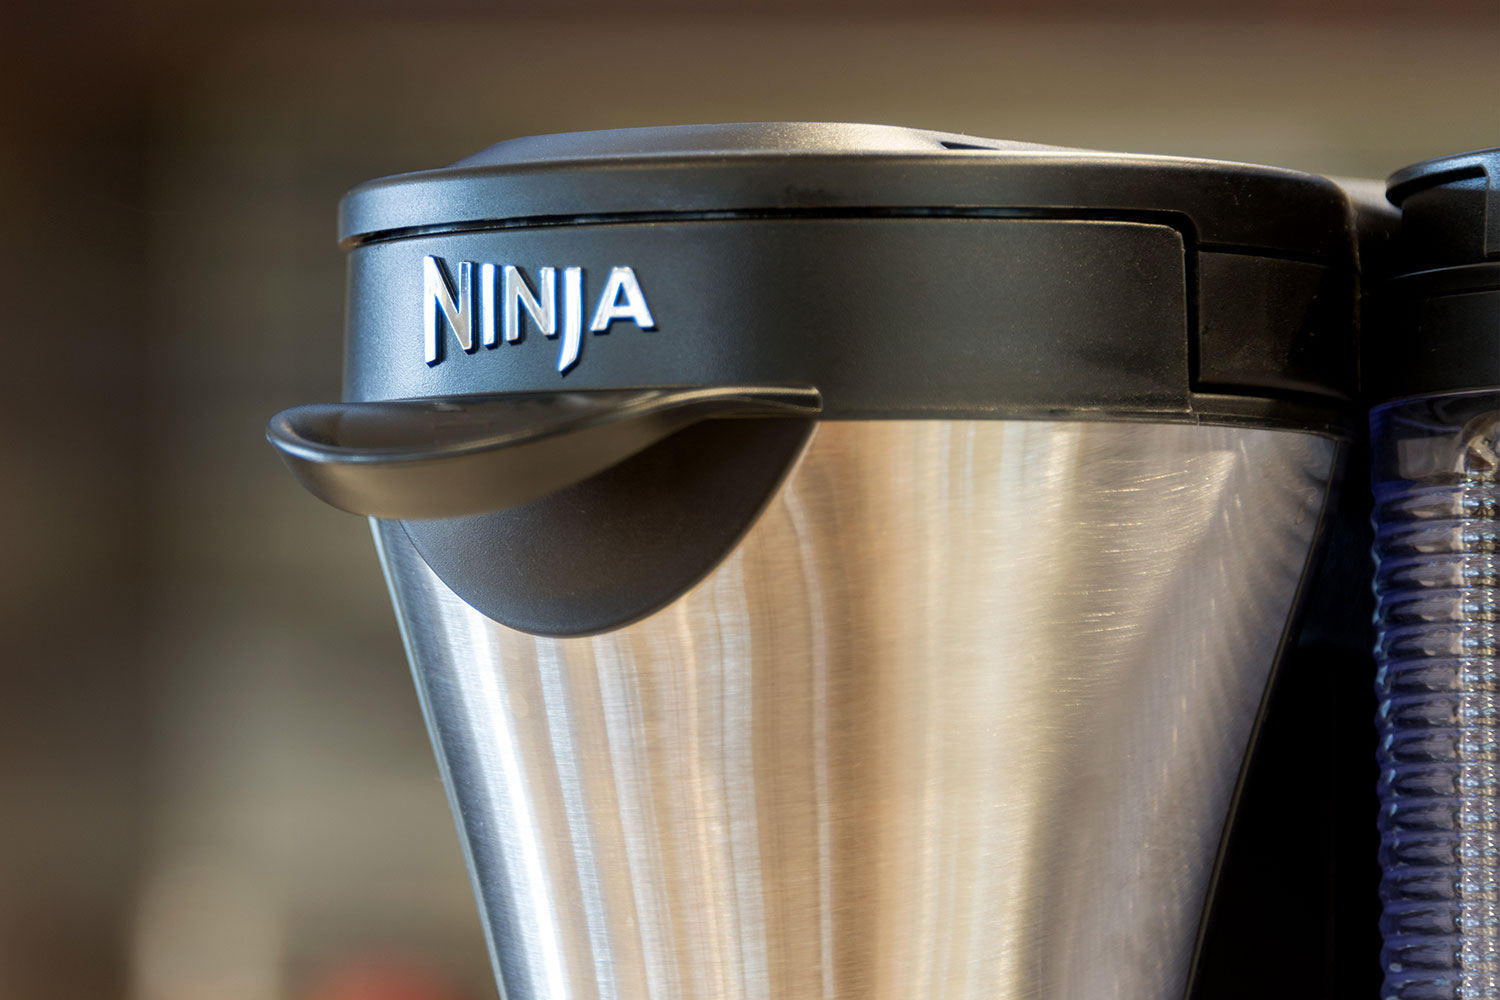 https://www.digitaltrends.com/wp-content/uploads/2016/07/Ninja-Coffee-Bar-spout.jpg?fit=1500%2C1000&p=1